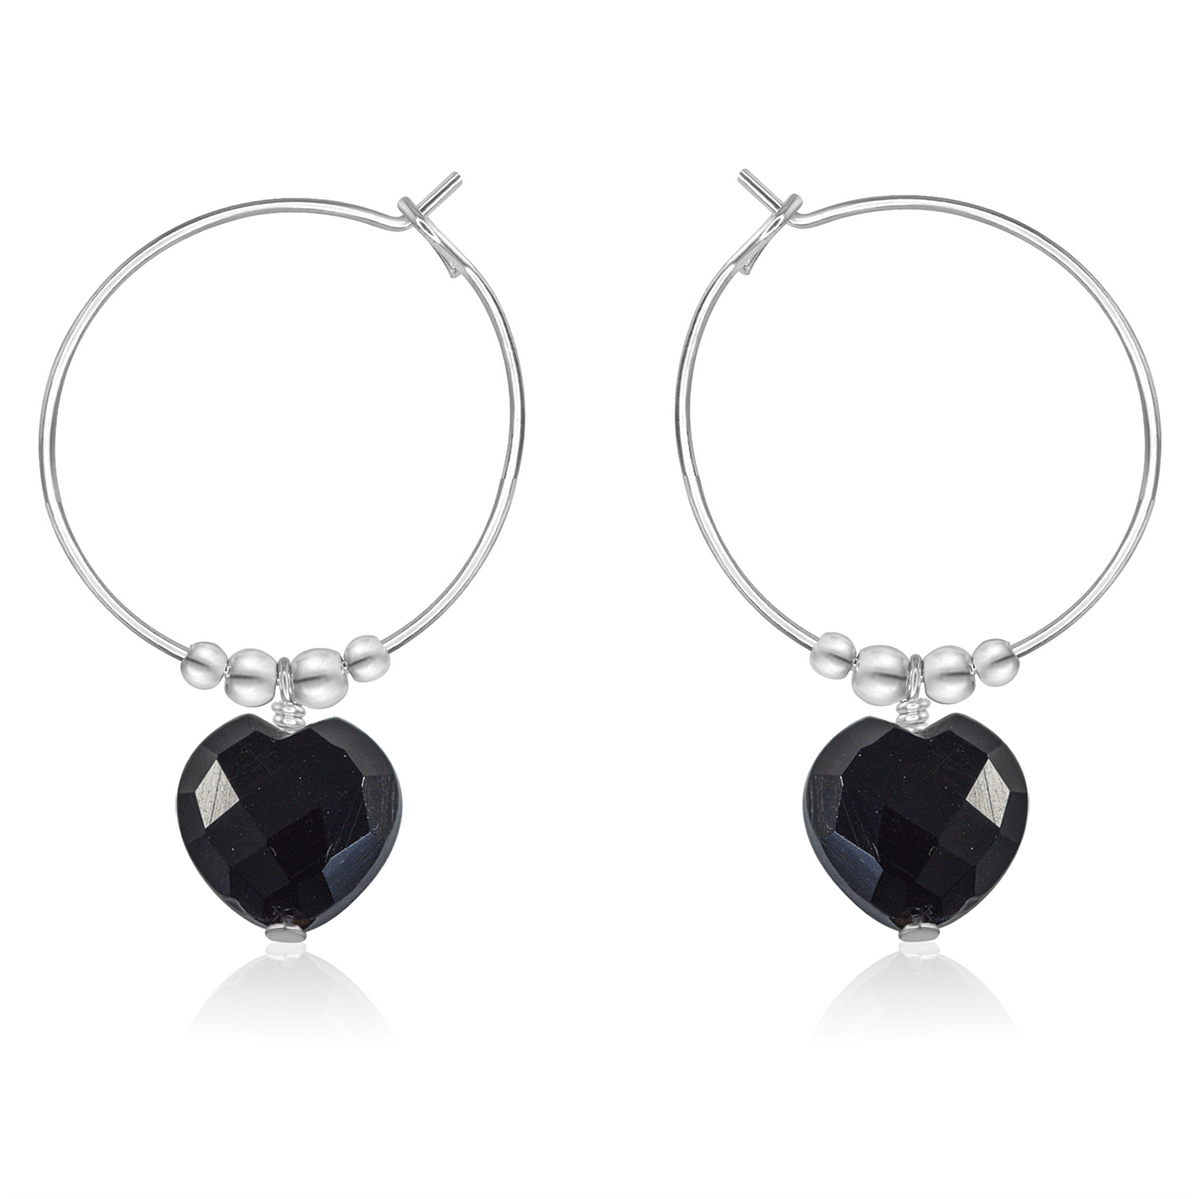 Black Onyx Crystal Heart Dangle Hoop Earrings - Black Onyx Crystal Heart Dangle Hoop Earrings - Sterling Silver - Luna Tide Handmade Crystal Jewellery